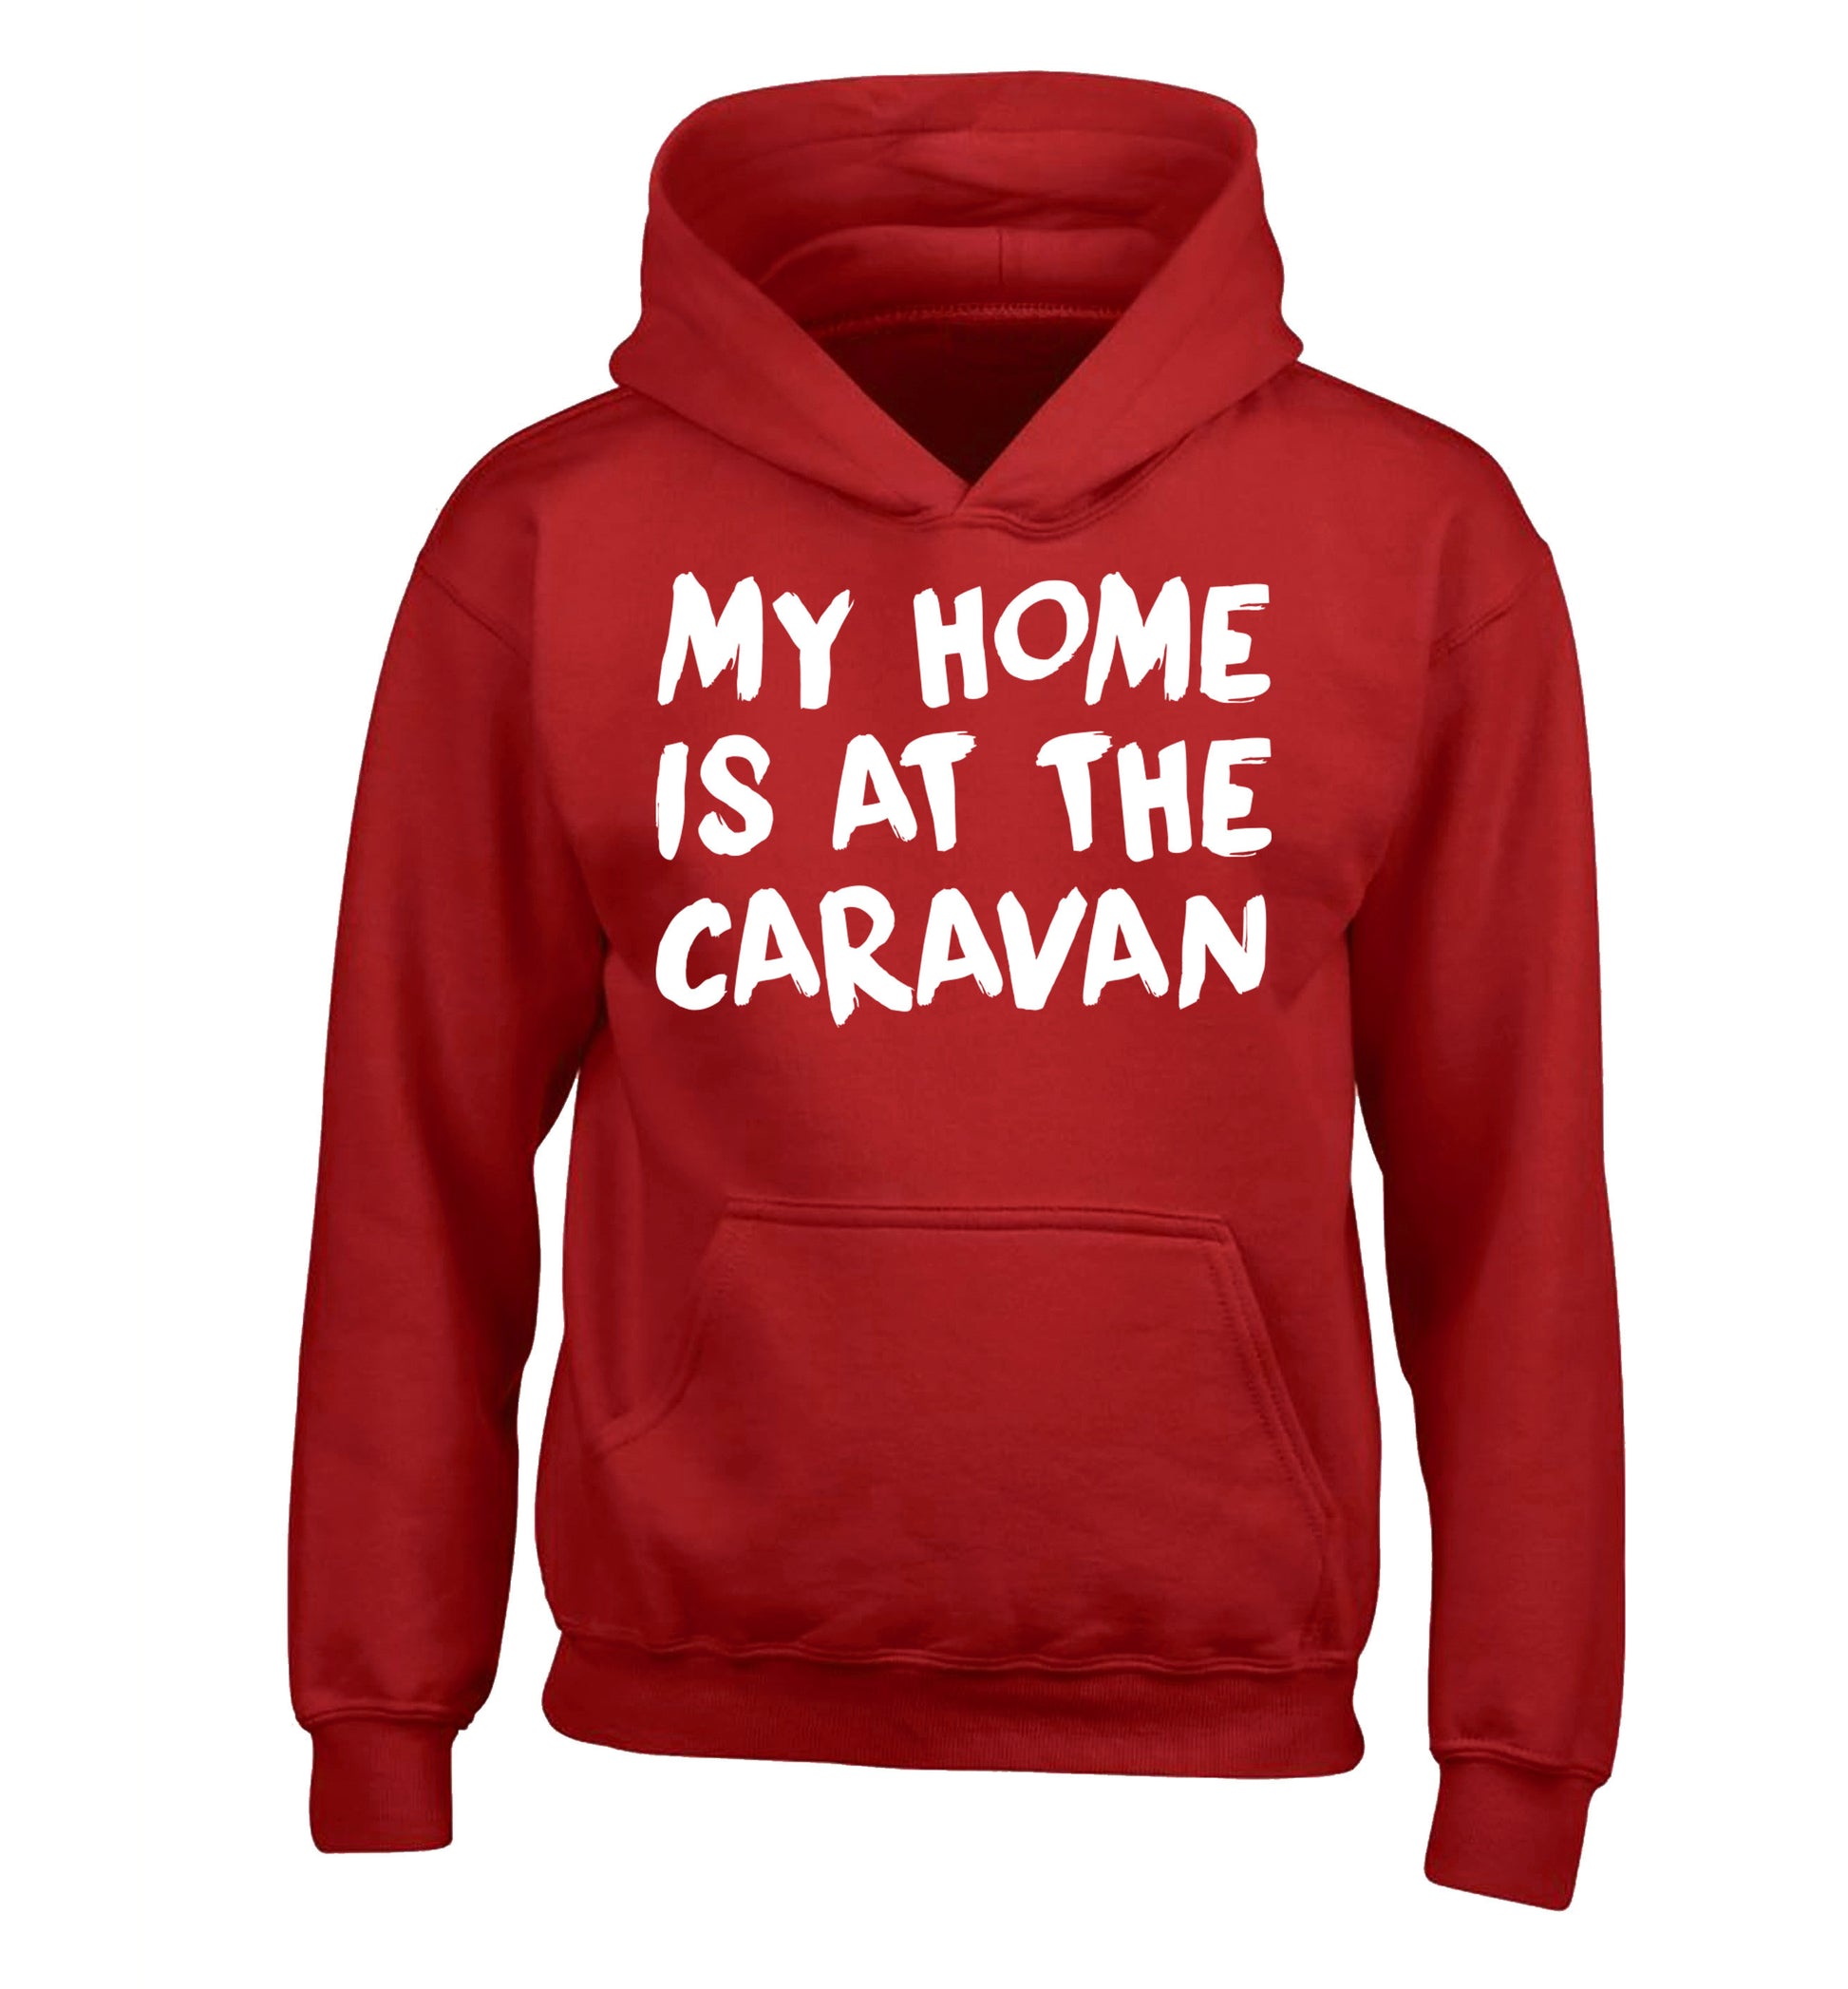 My home is at the caravan children's red hoodie 12-14 Years